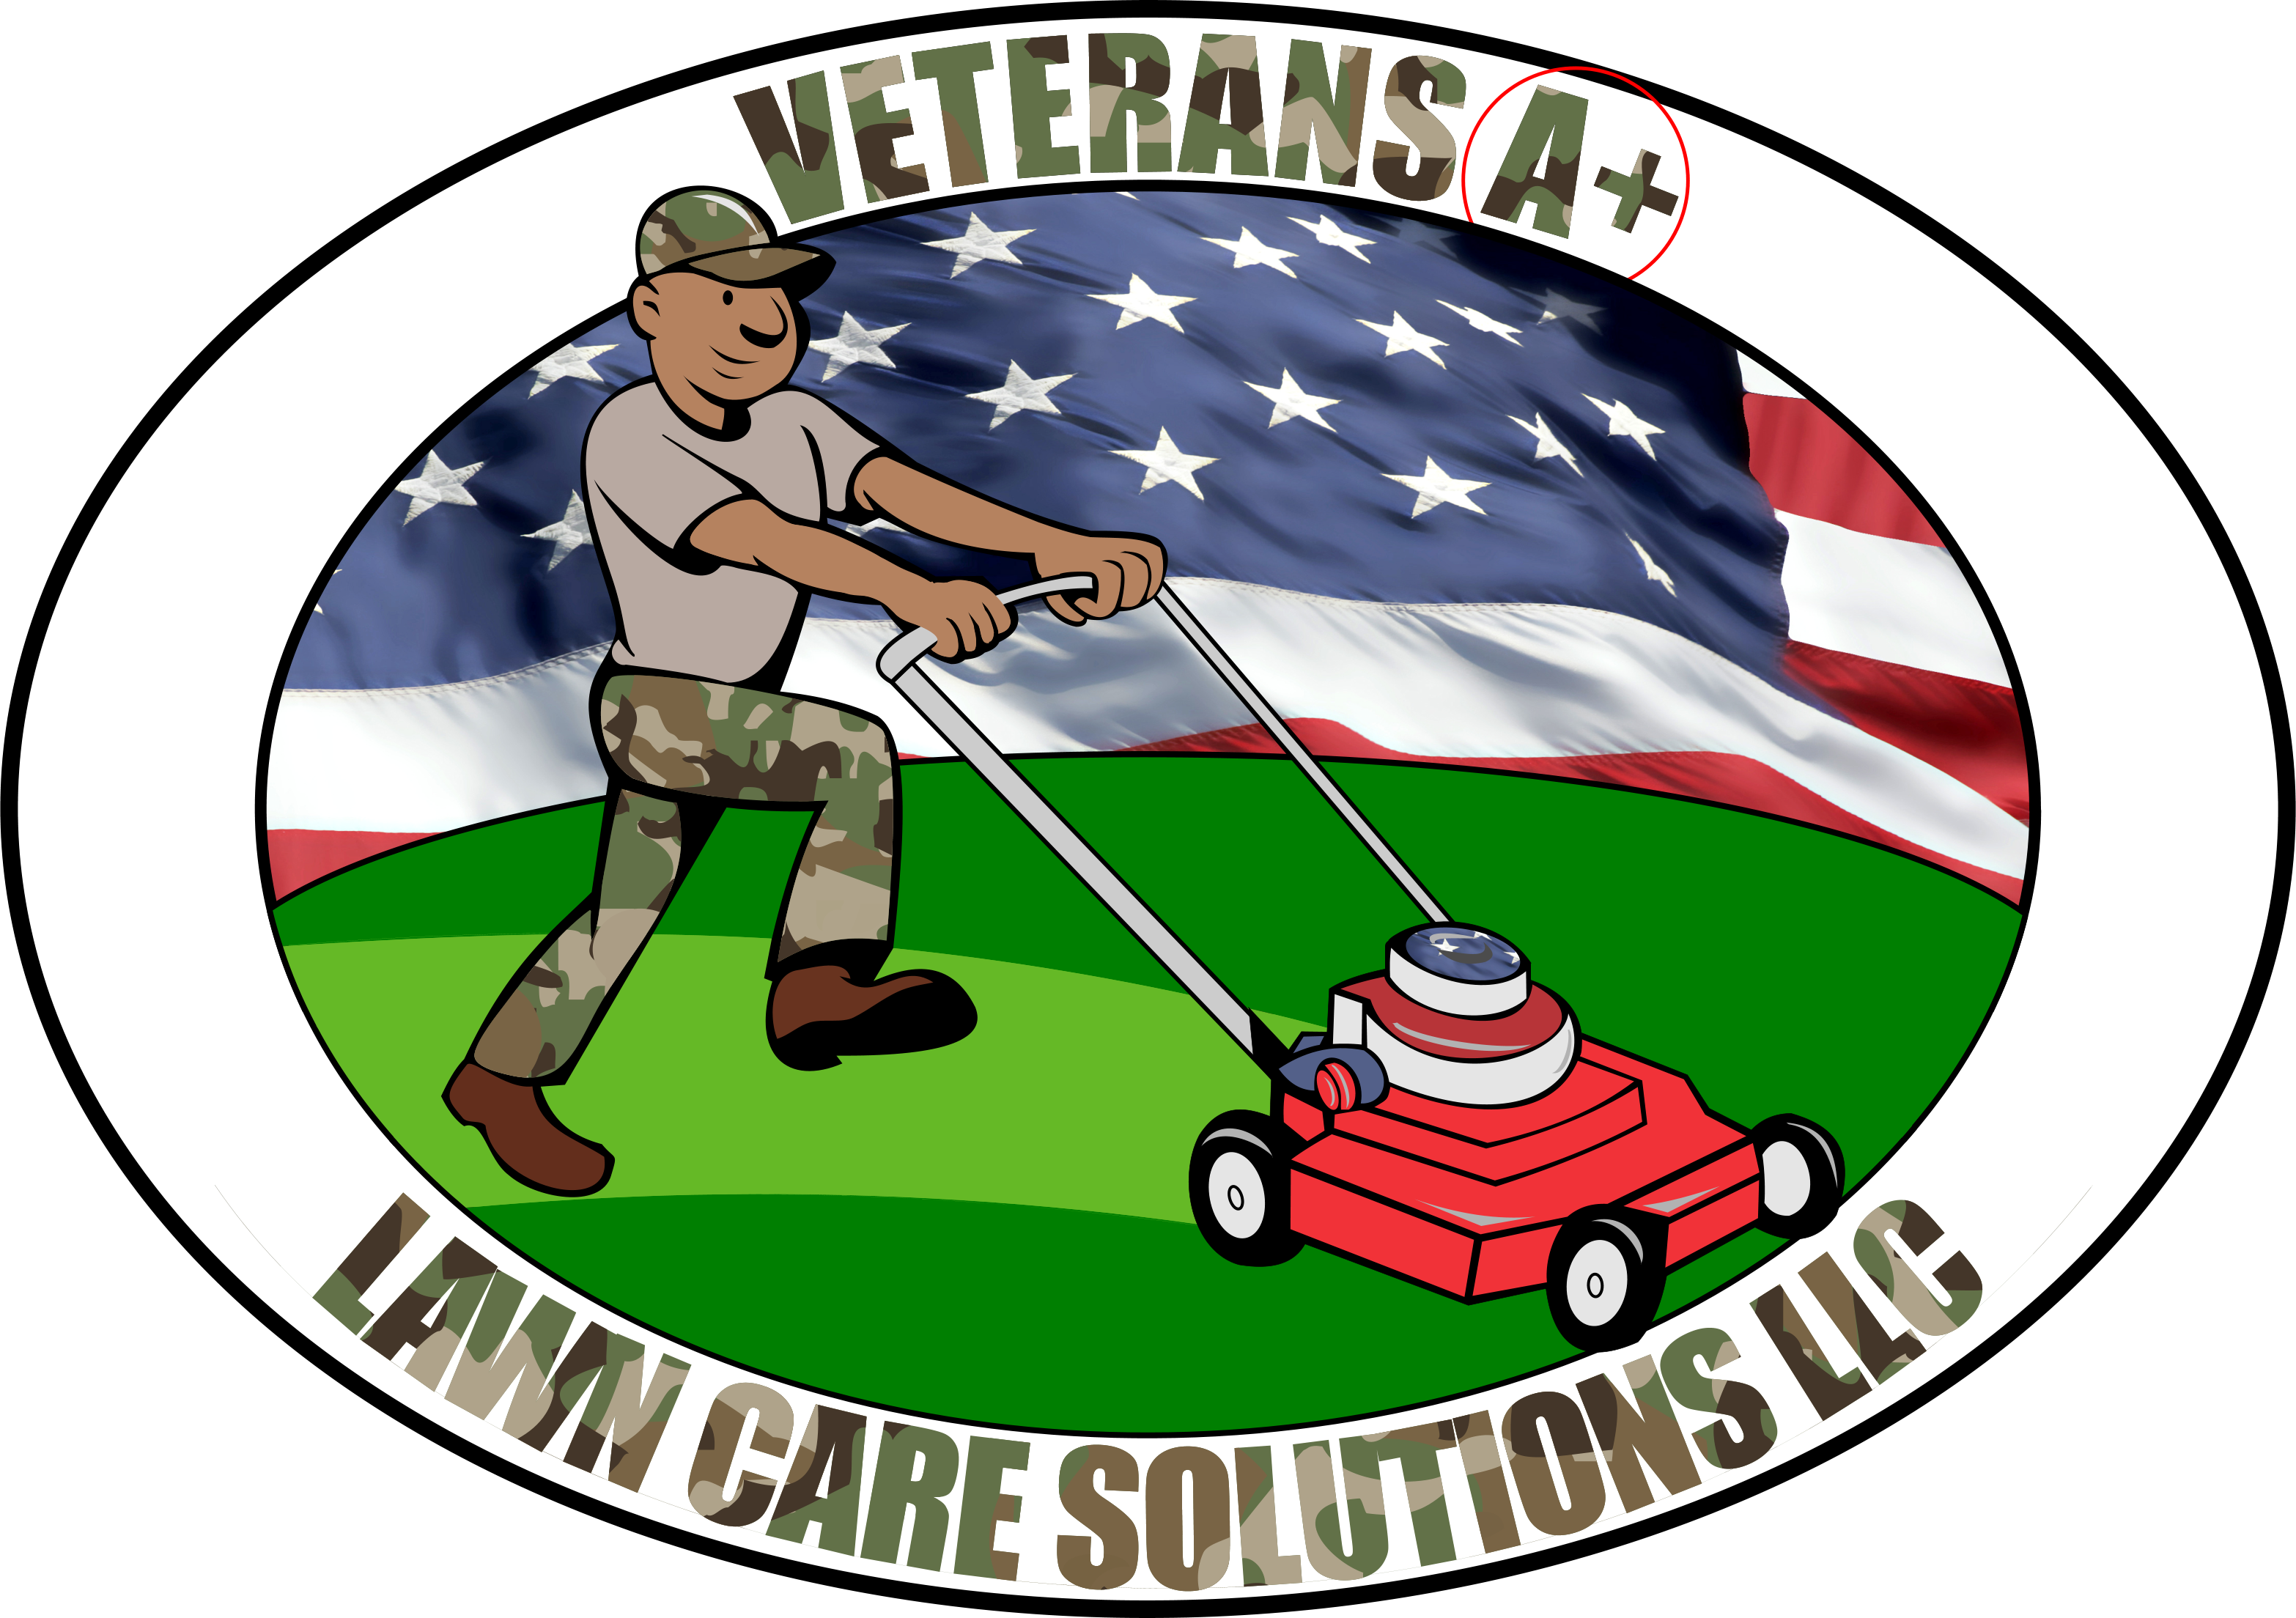 Veterans A+ Lawn Care Solutions, LLC